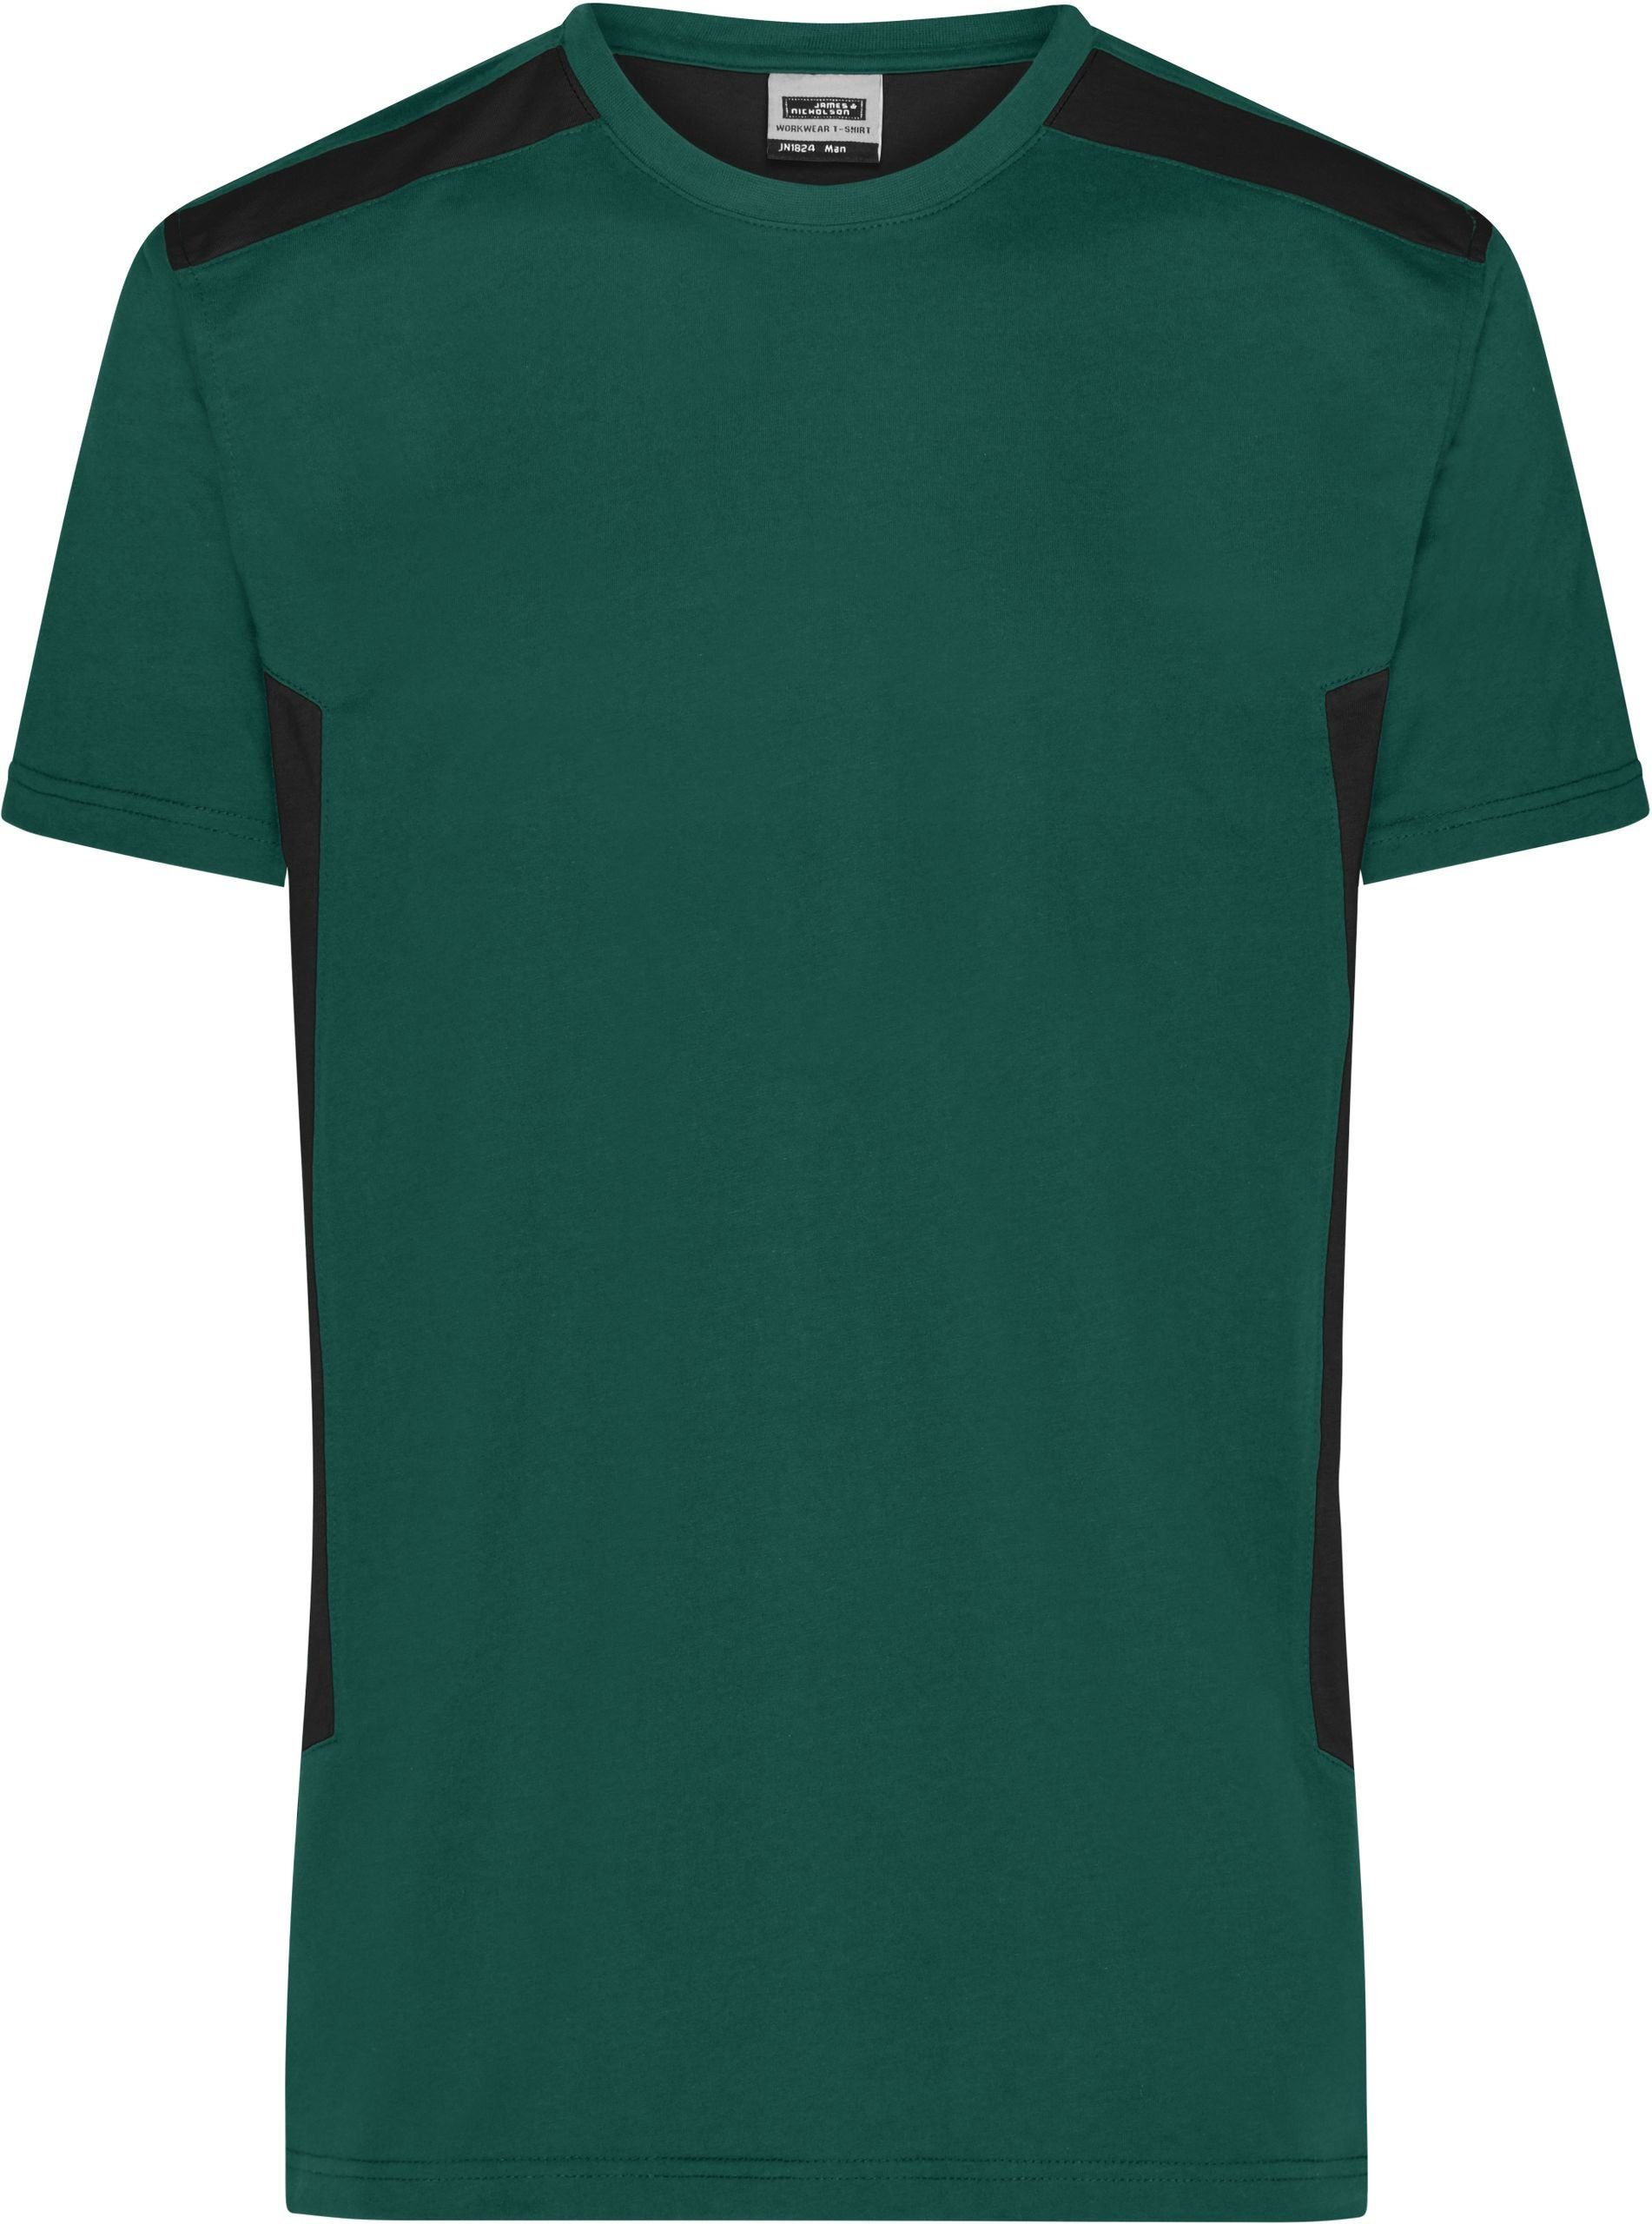 James & Nicholson T-Shirt Herren Workwear T-Shirt - Strong dark green/black